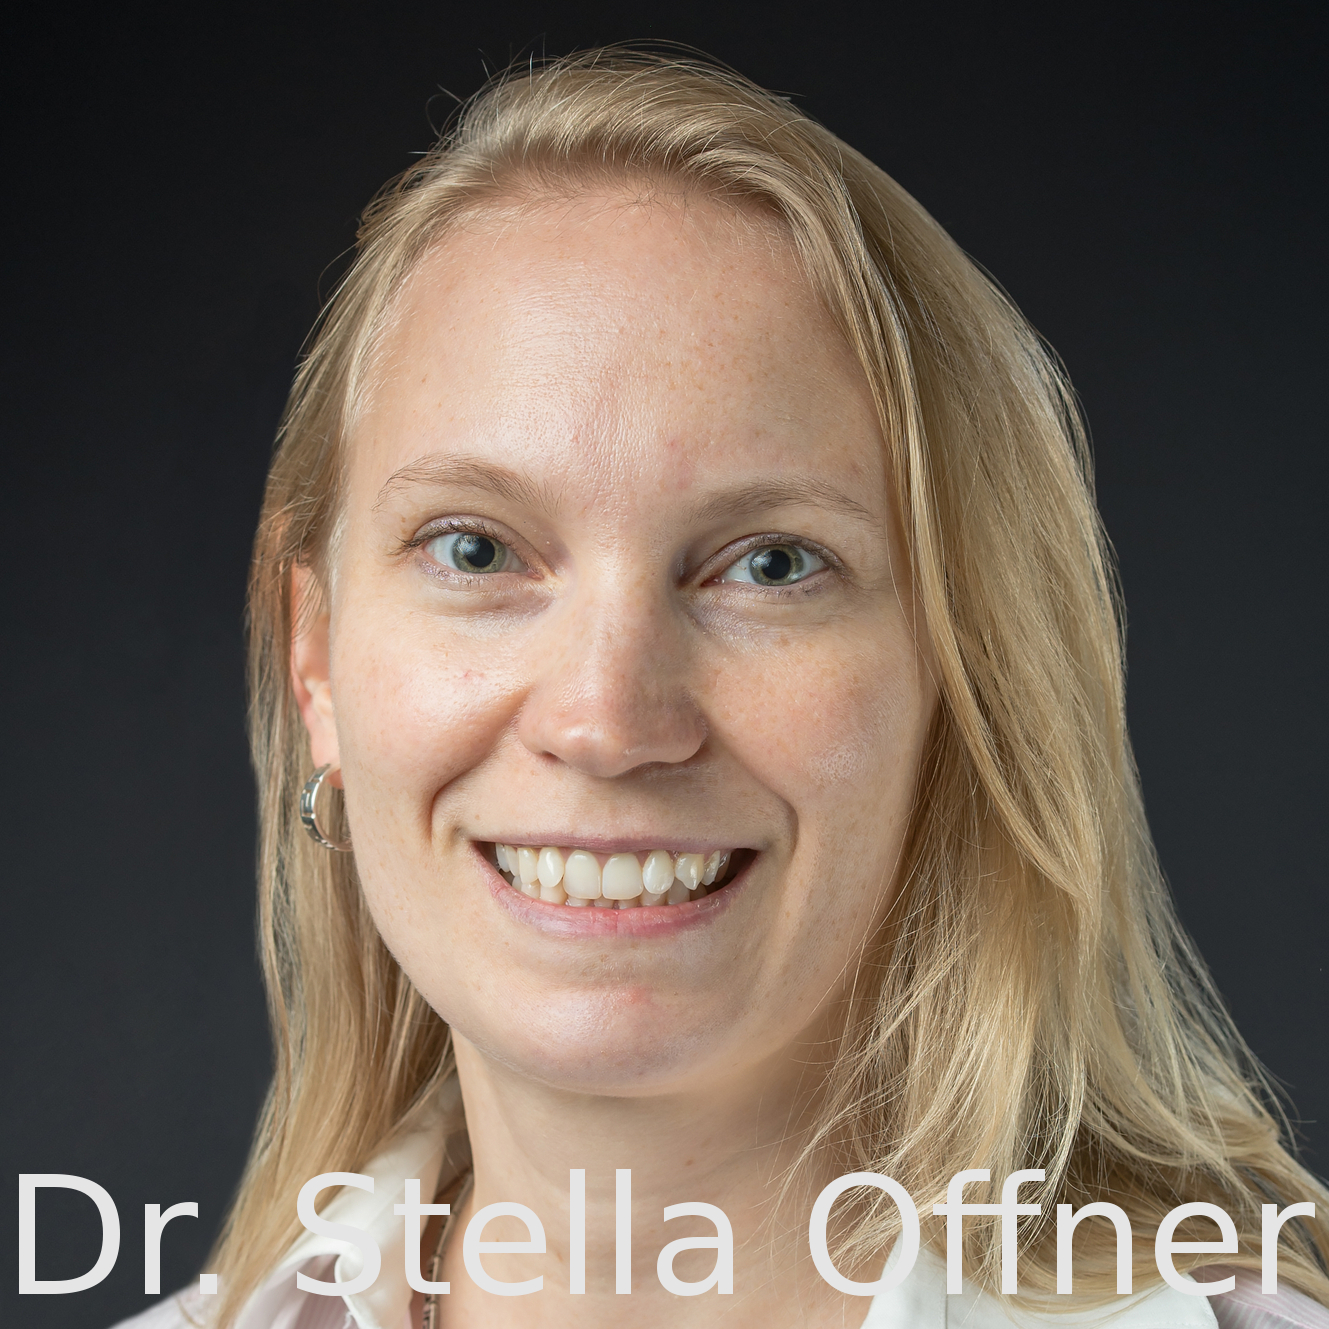 Dr. Stella S. R. Offner